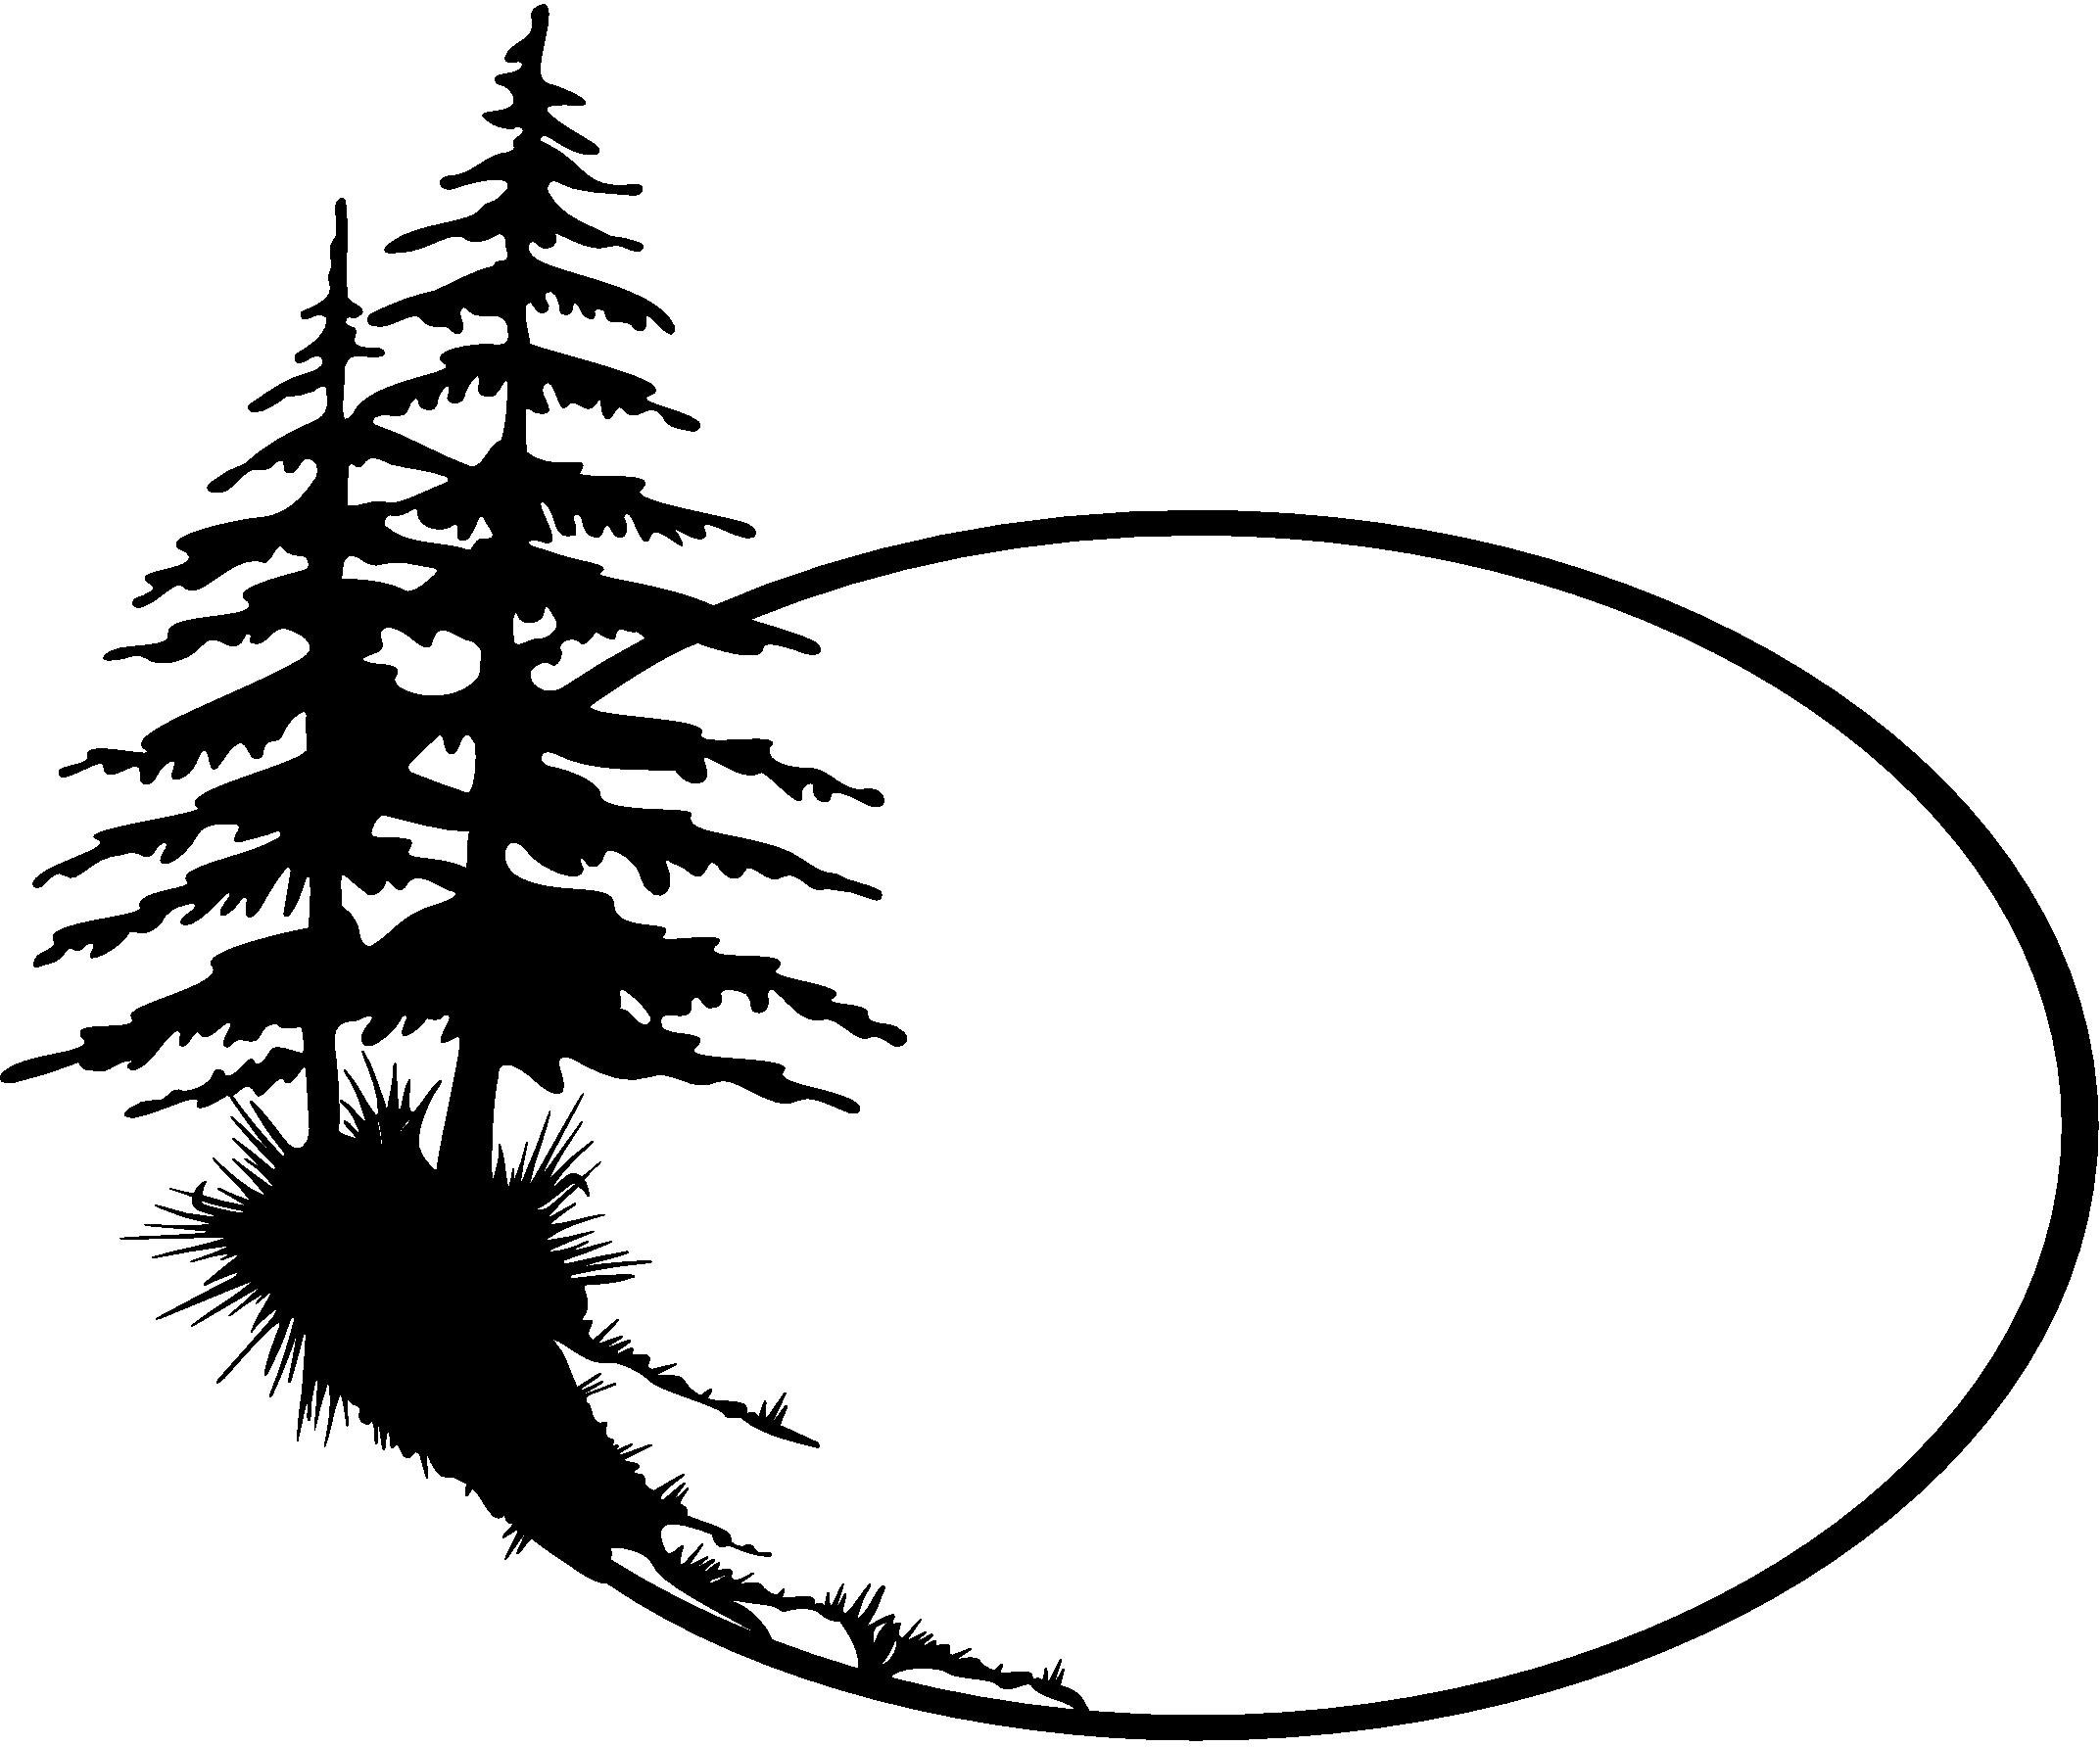 Pine tree outline clip art - ClipartFox